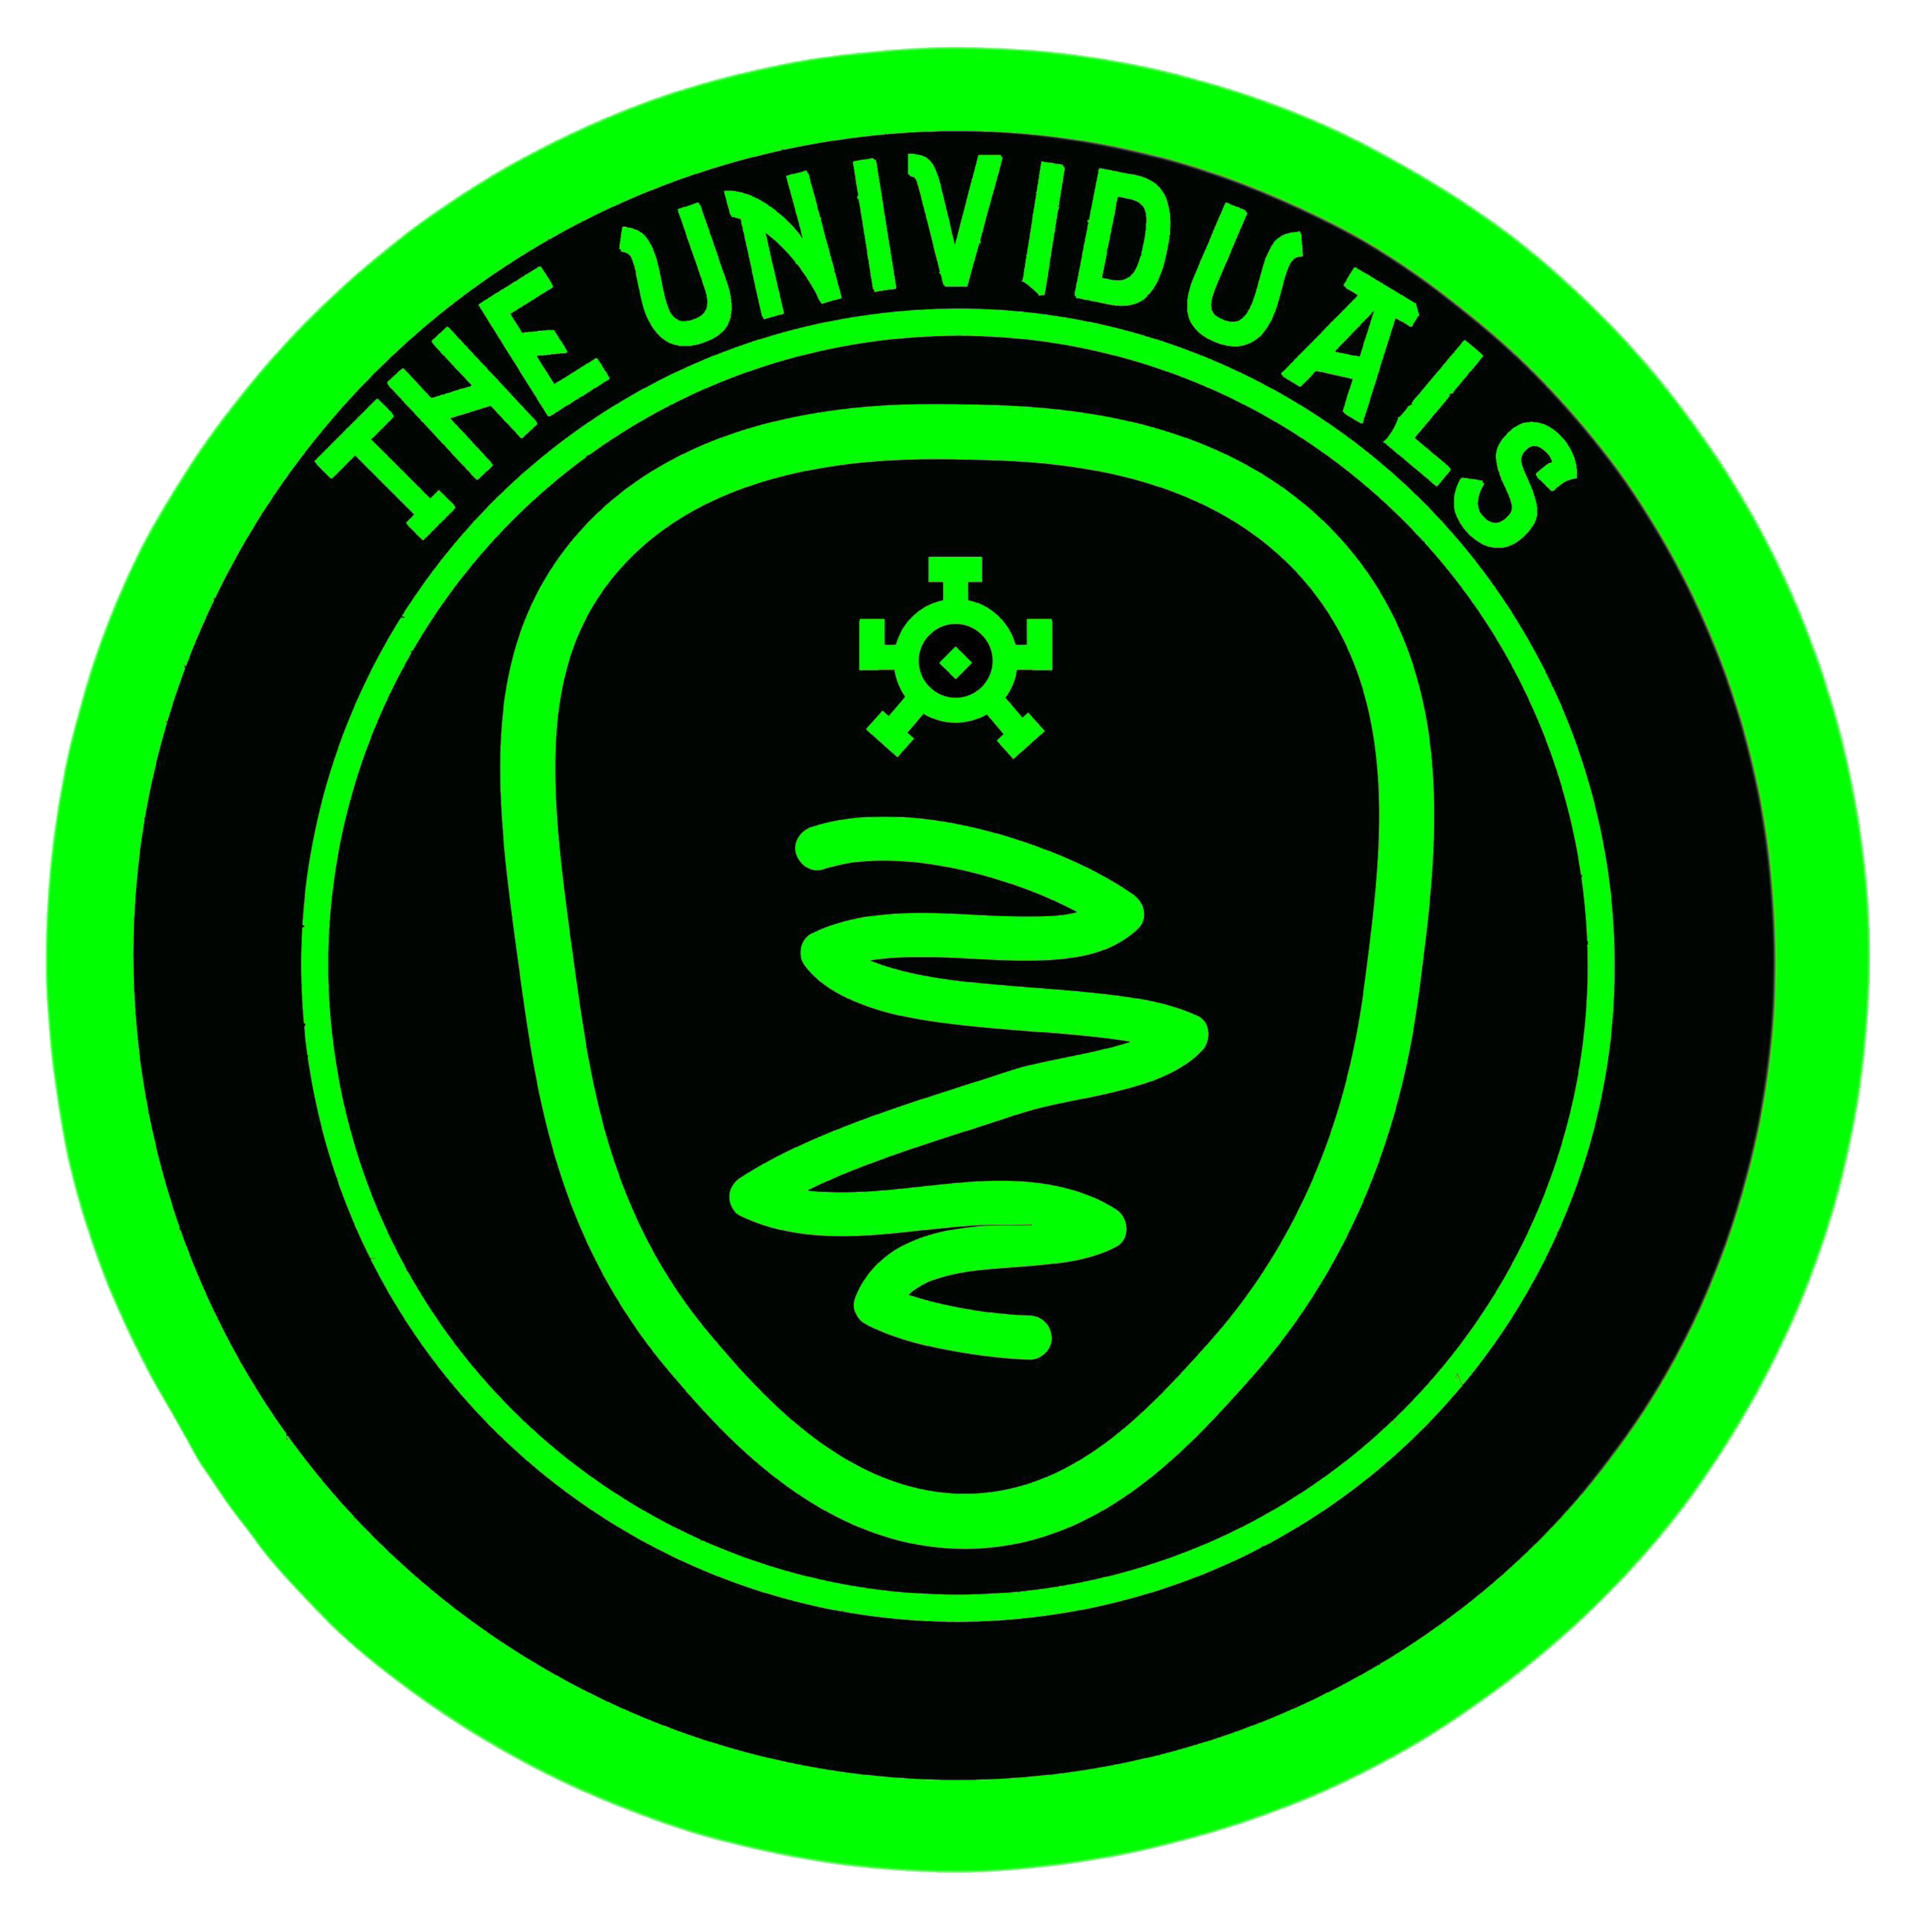 The Unividuals